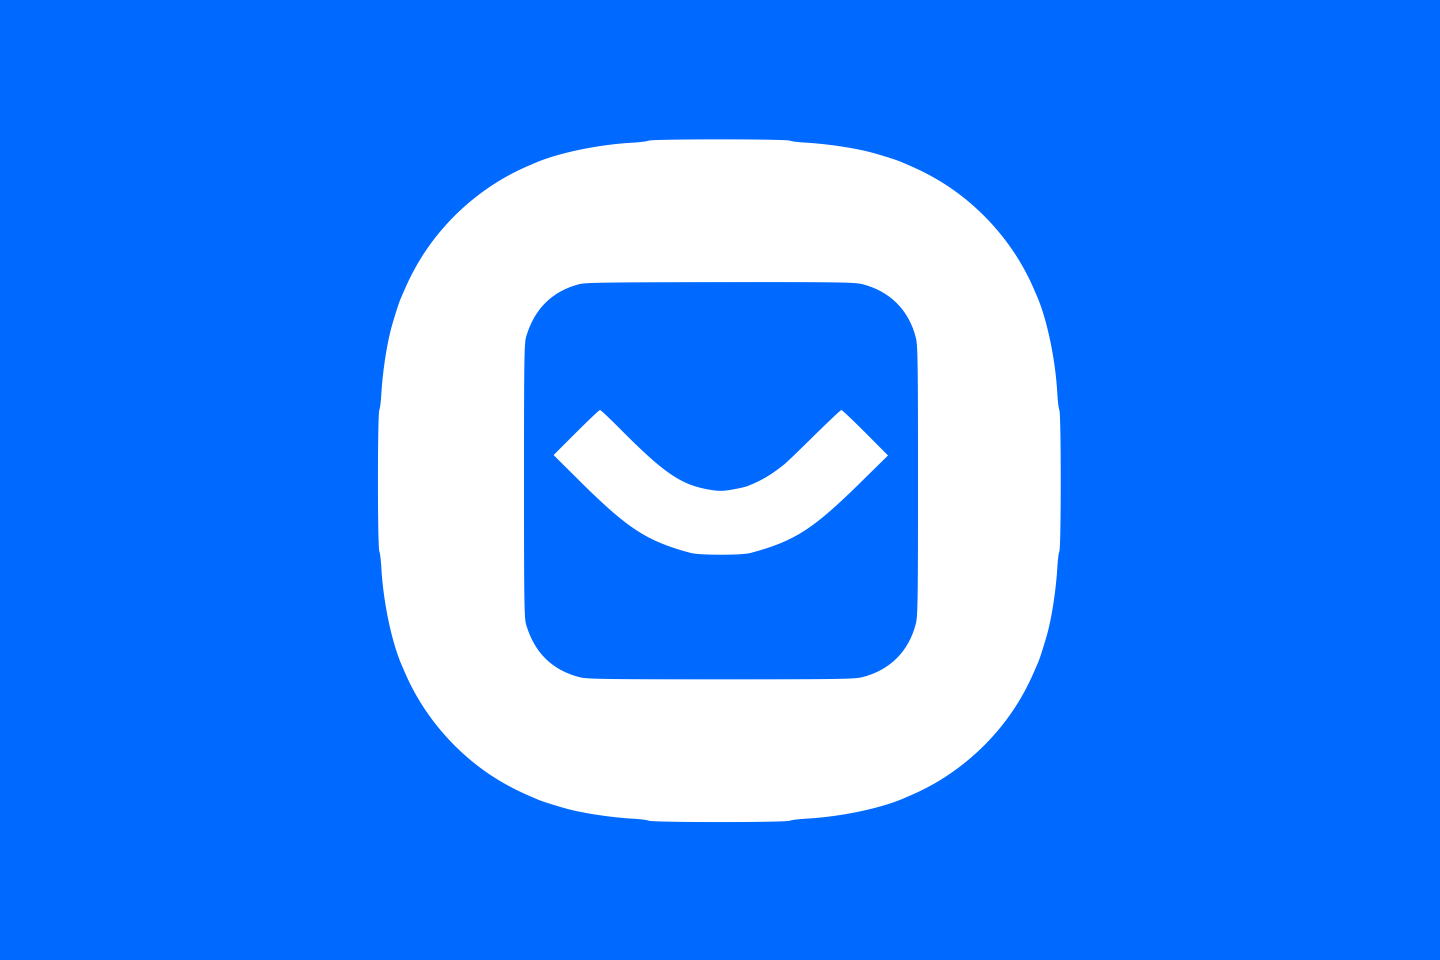 Buttondown logo in a blue background